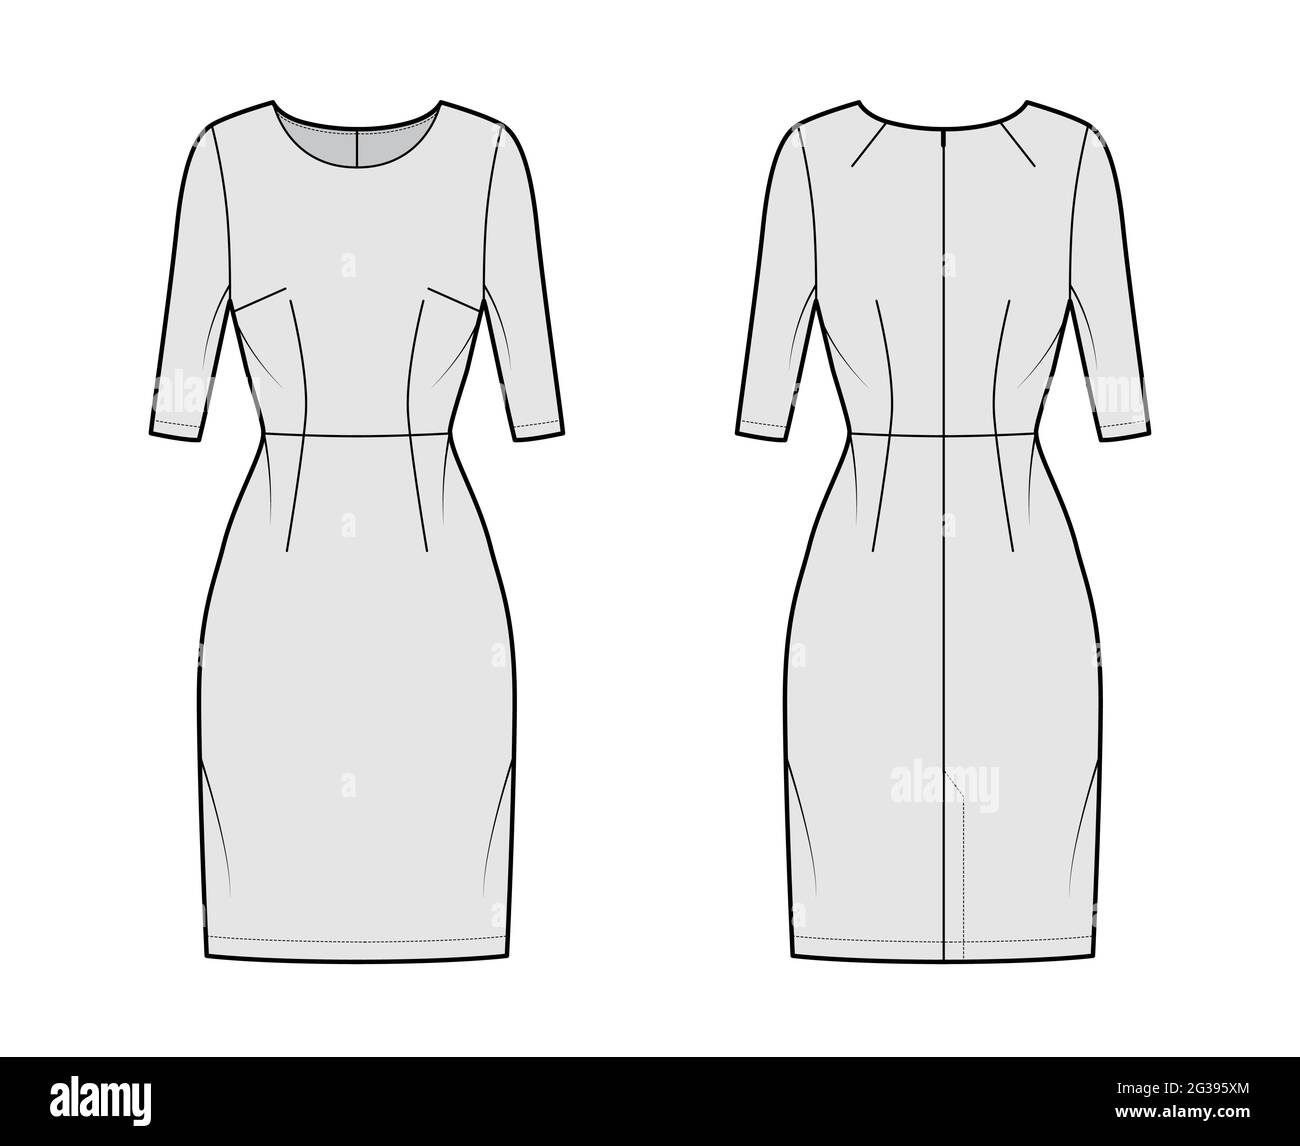 Dress sheath technical fashion illustration with natural waistline ...